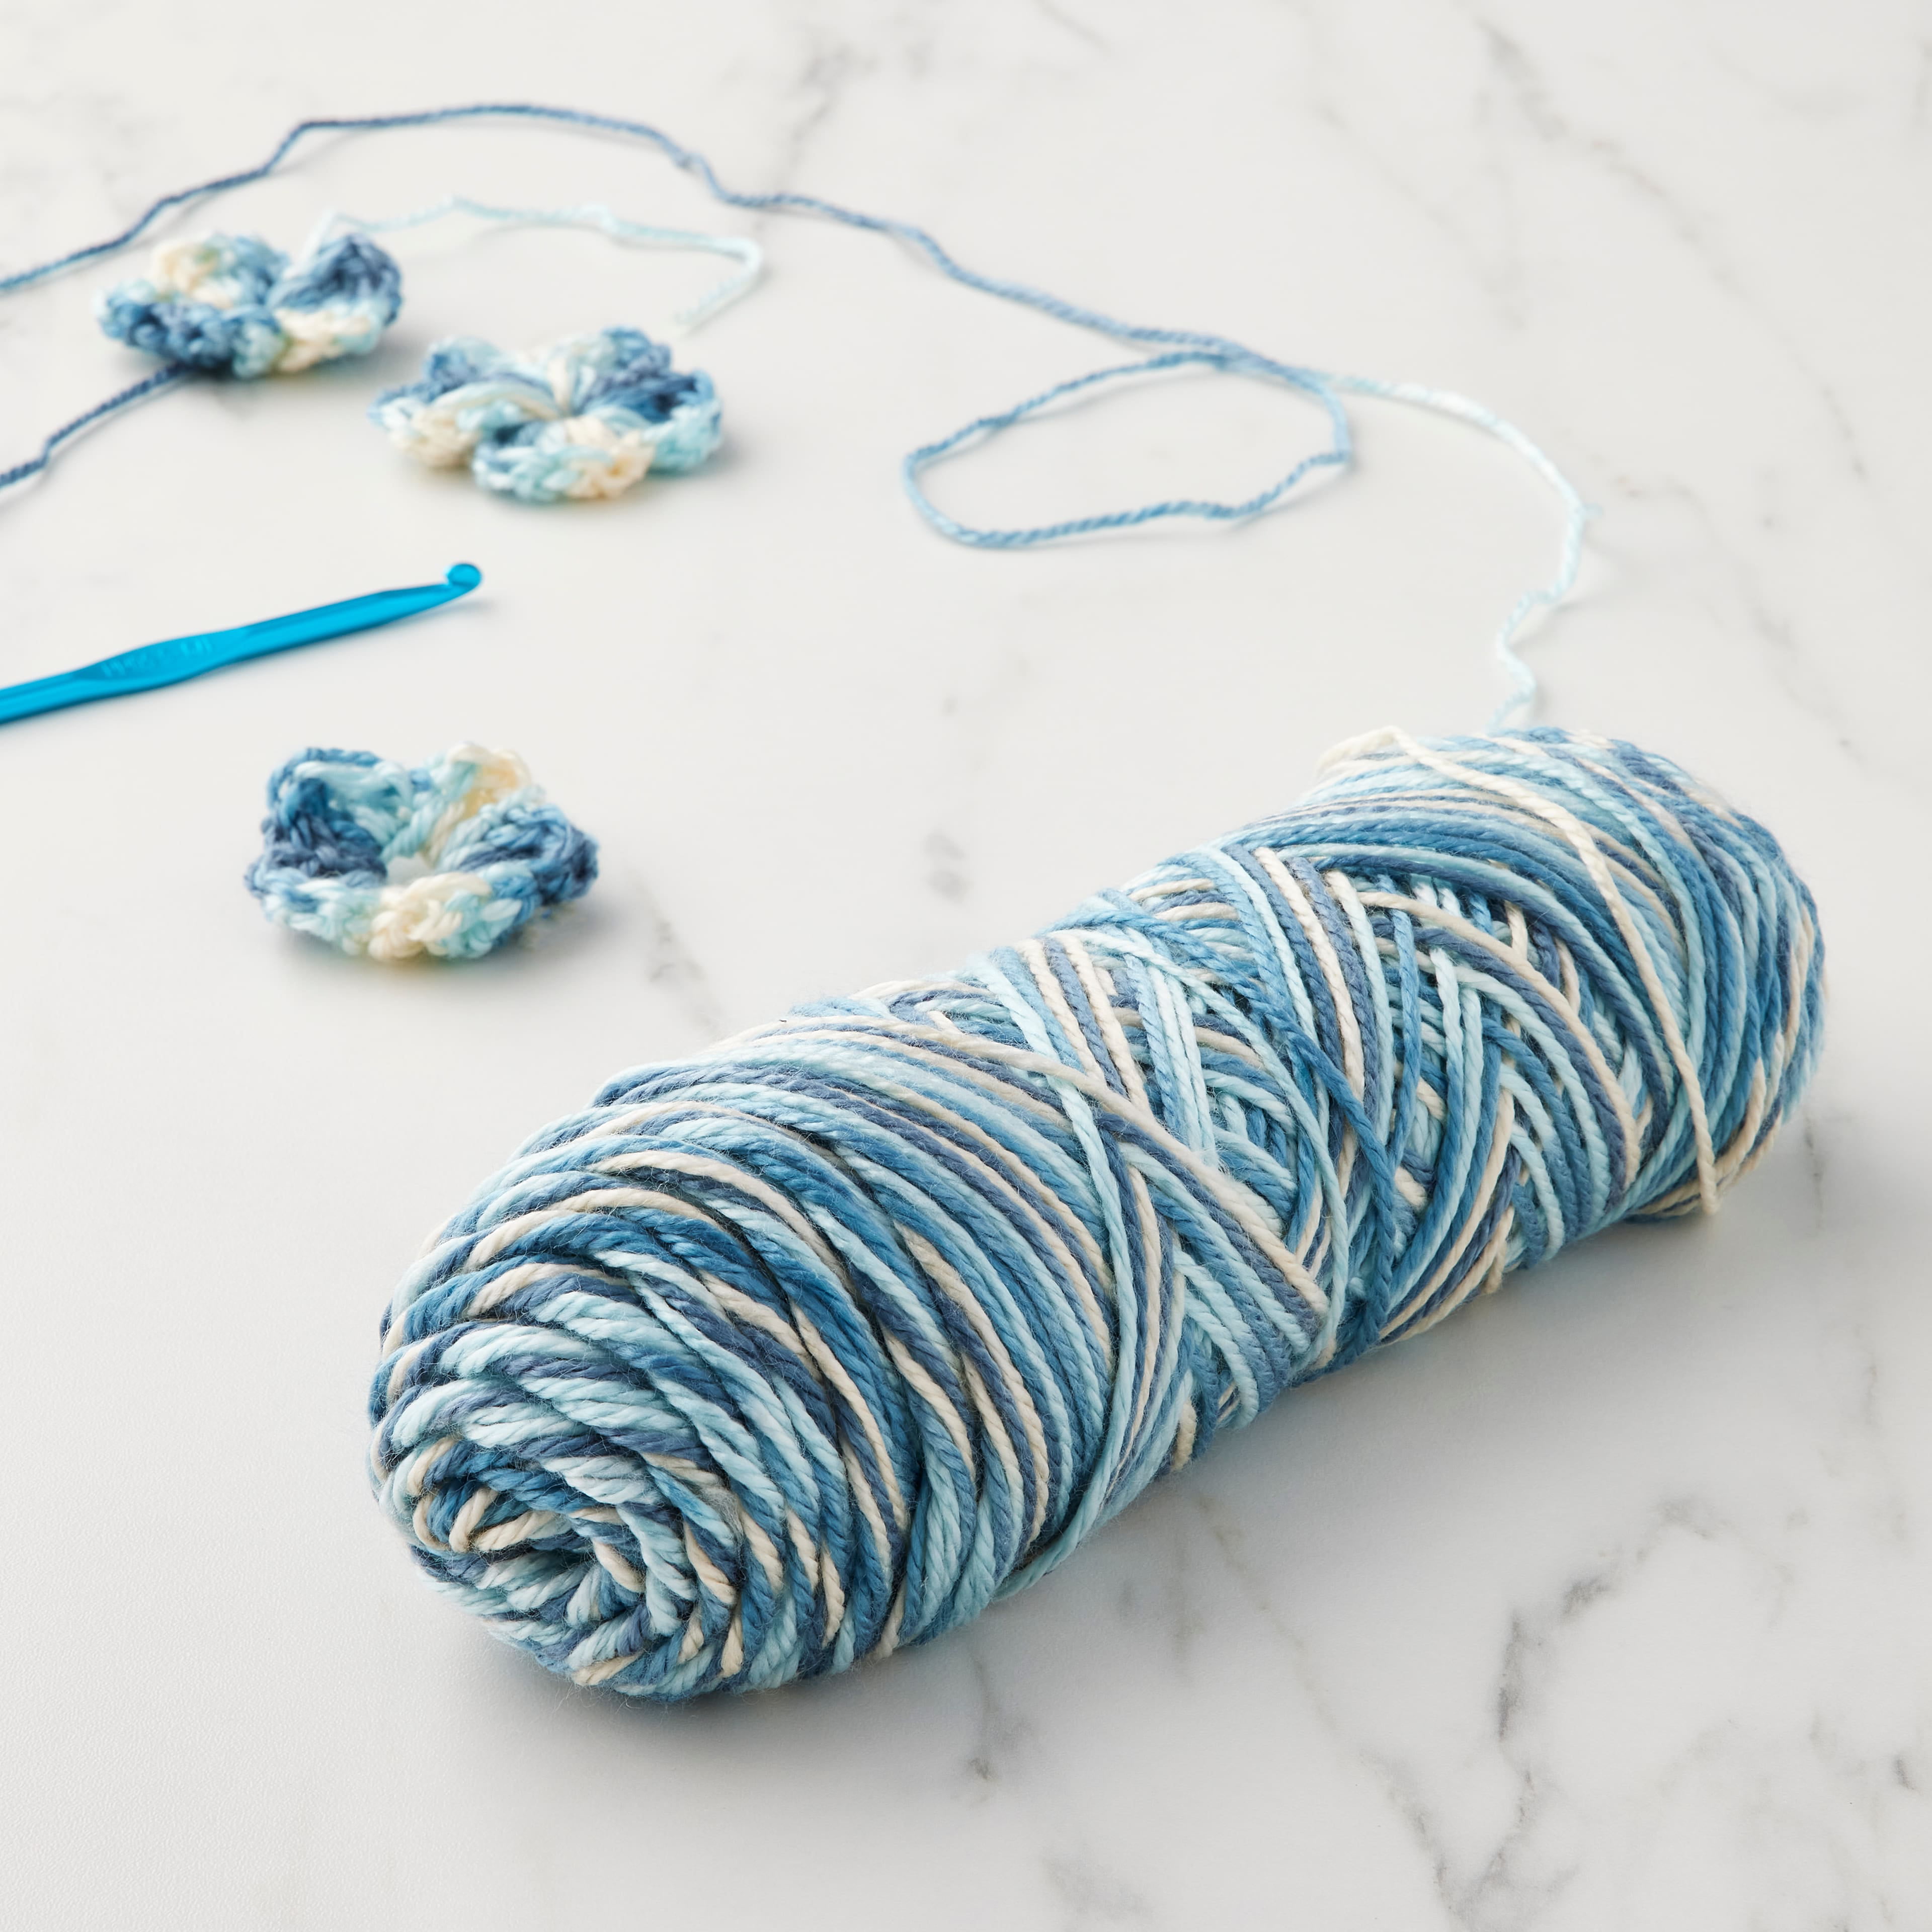  Loops & Threads Soft & Shiny Yarn, 1 Ball, Citrus, 6